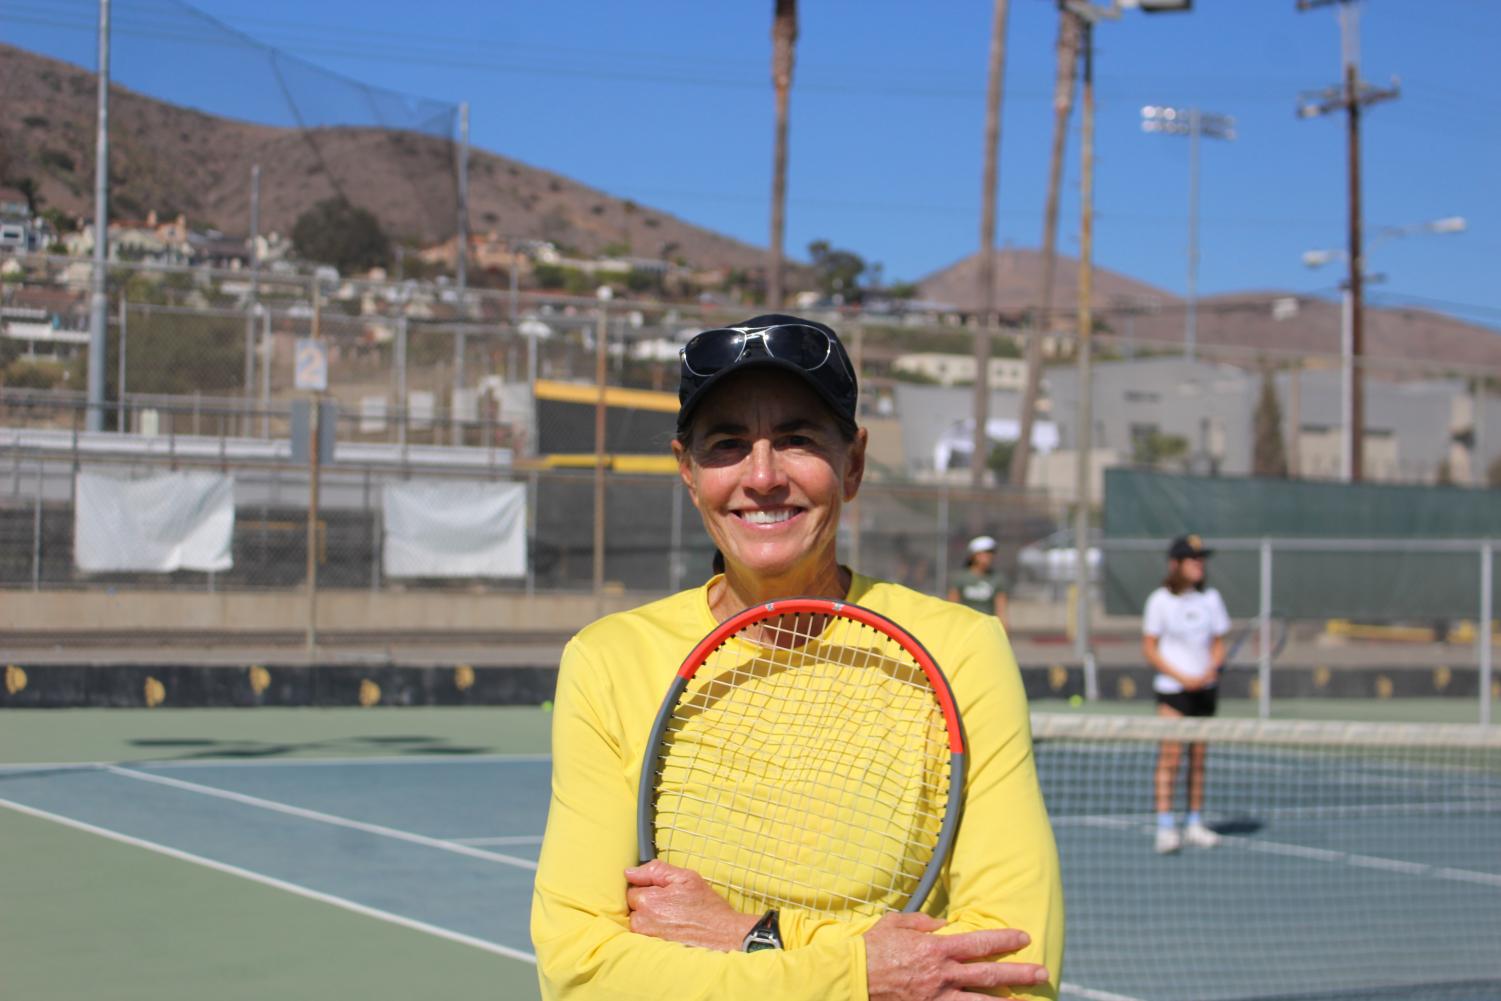 VHS has a new Tennis Coach, Alison Ferguson – The Cougar Press